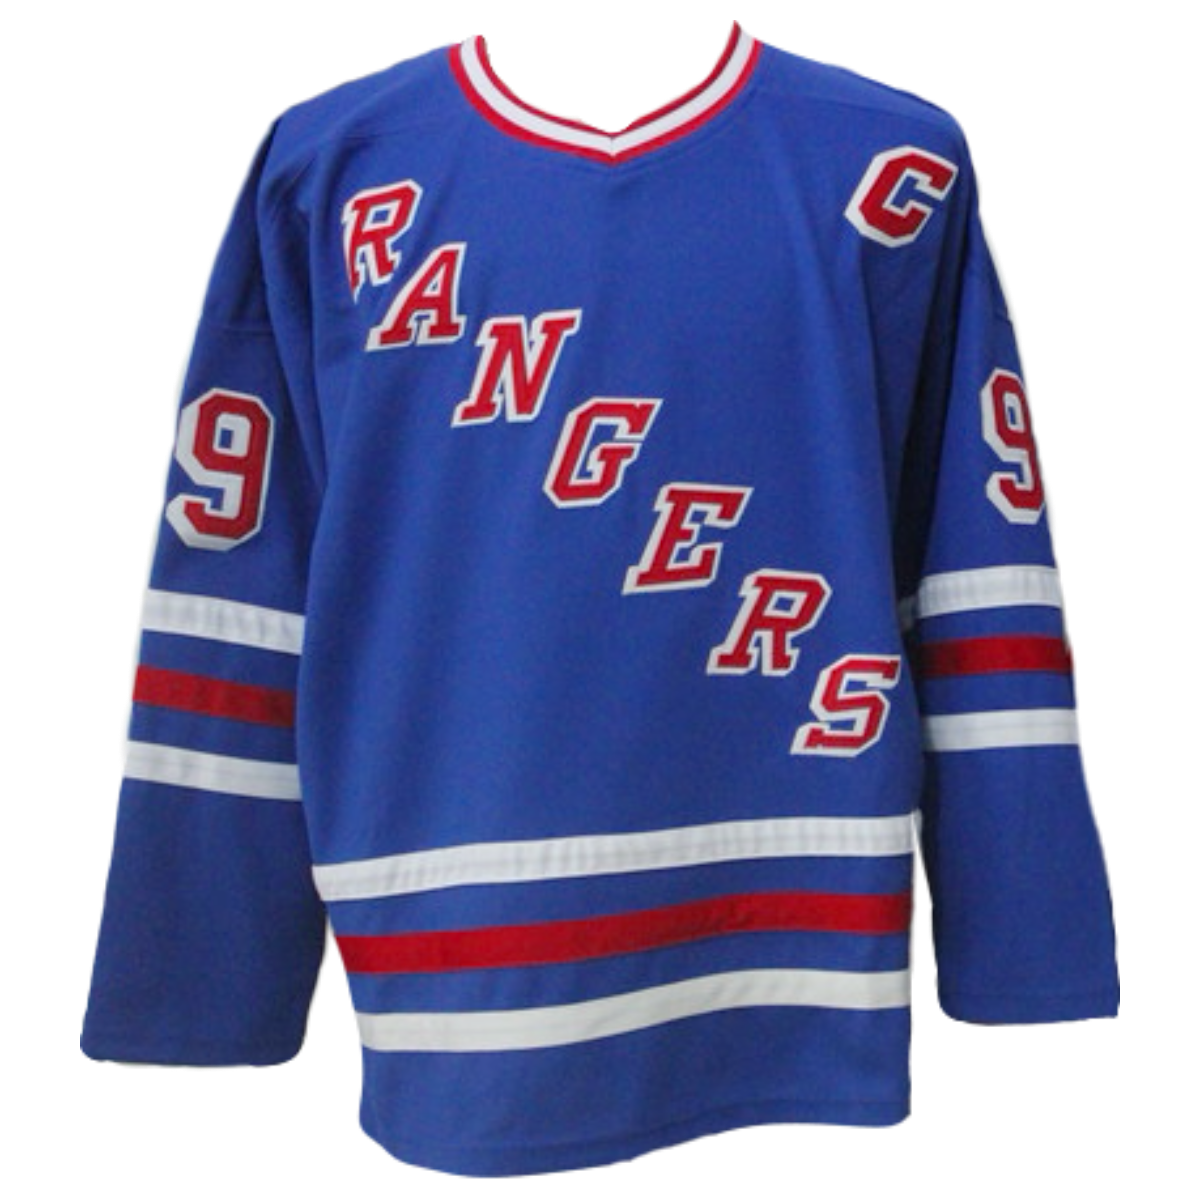 Wayne Gretzky New York Rangers CCM Brand 1996/97 Iconic Home Classic Premier Player Jersey - Blue